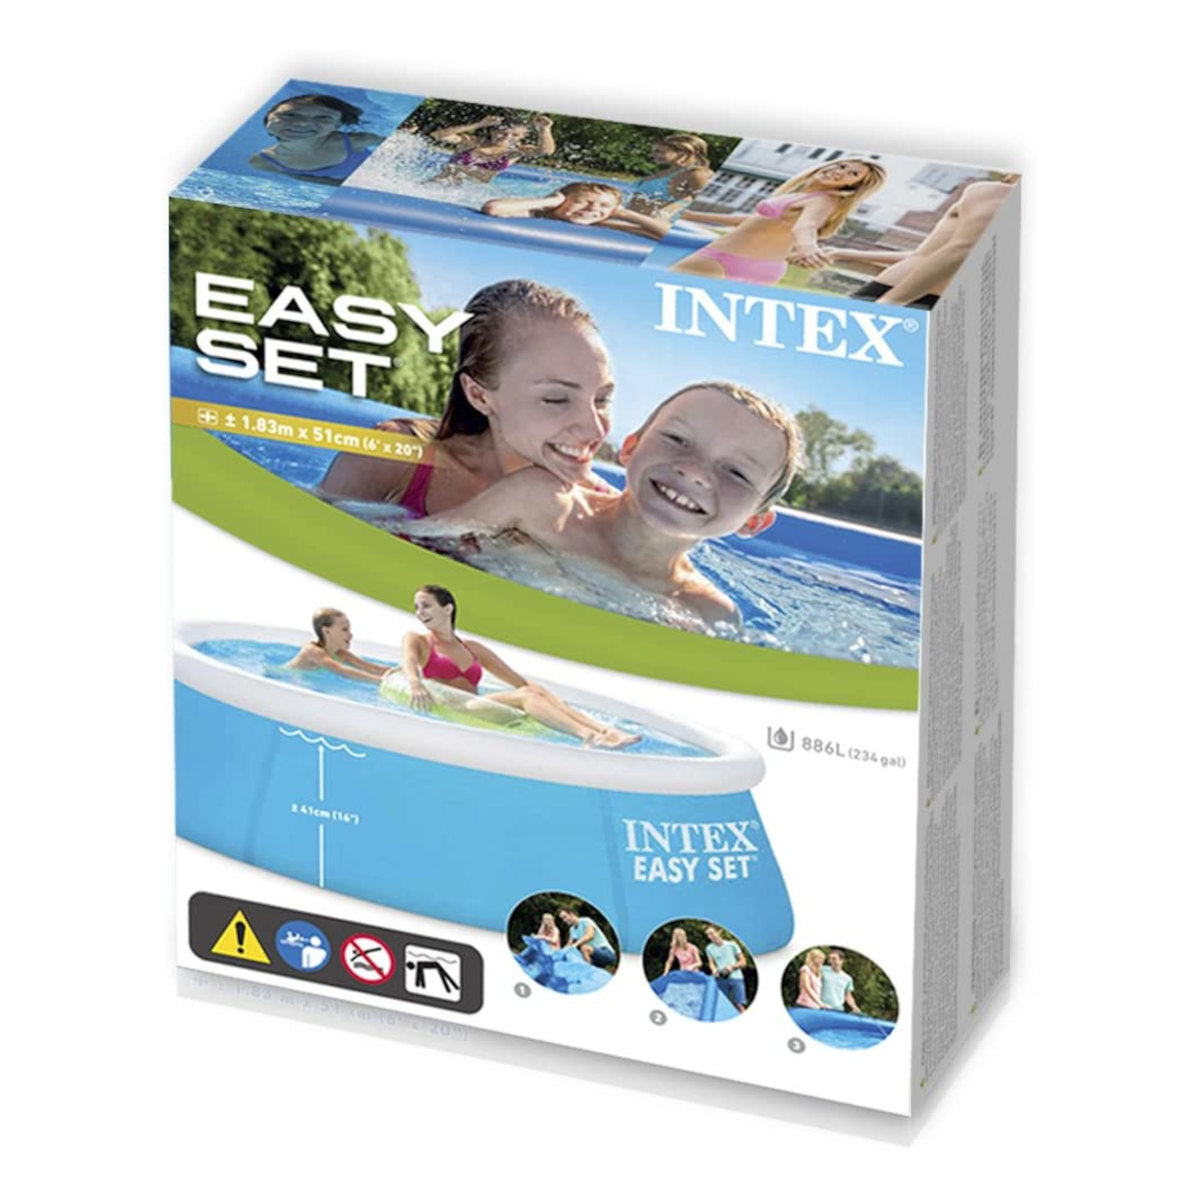 Intex EasySet Pool 183x51cm